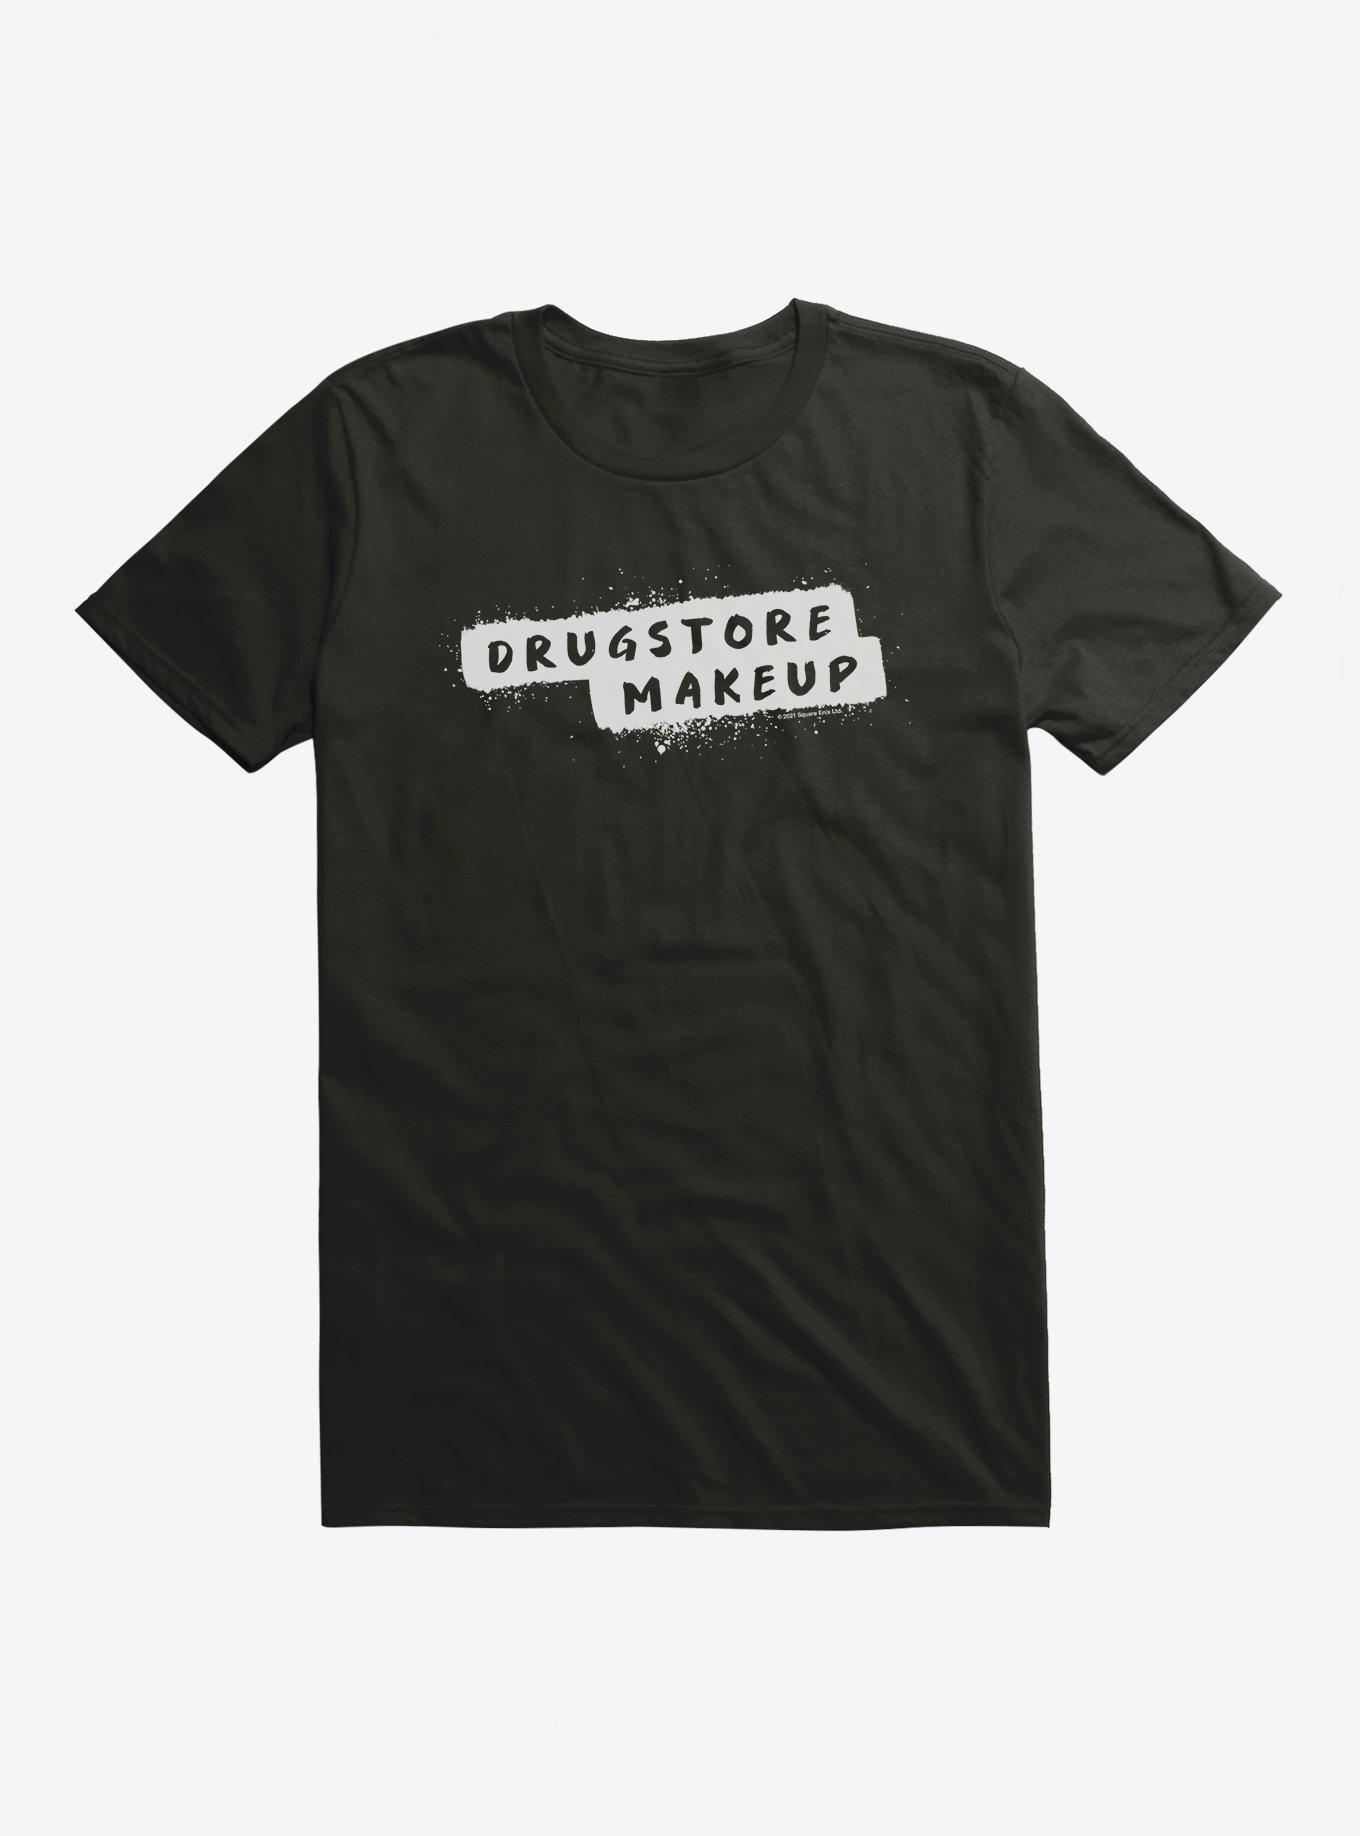 Square Enix Drugstore Makeup T-Shirt